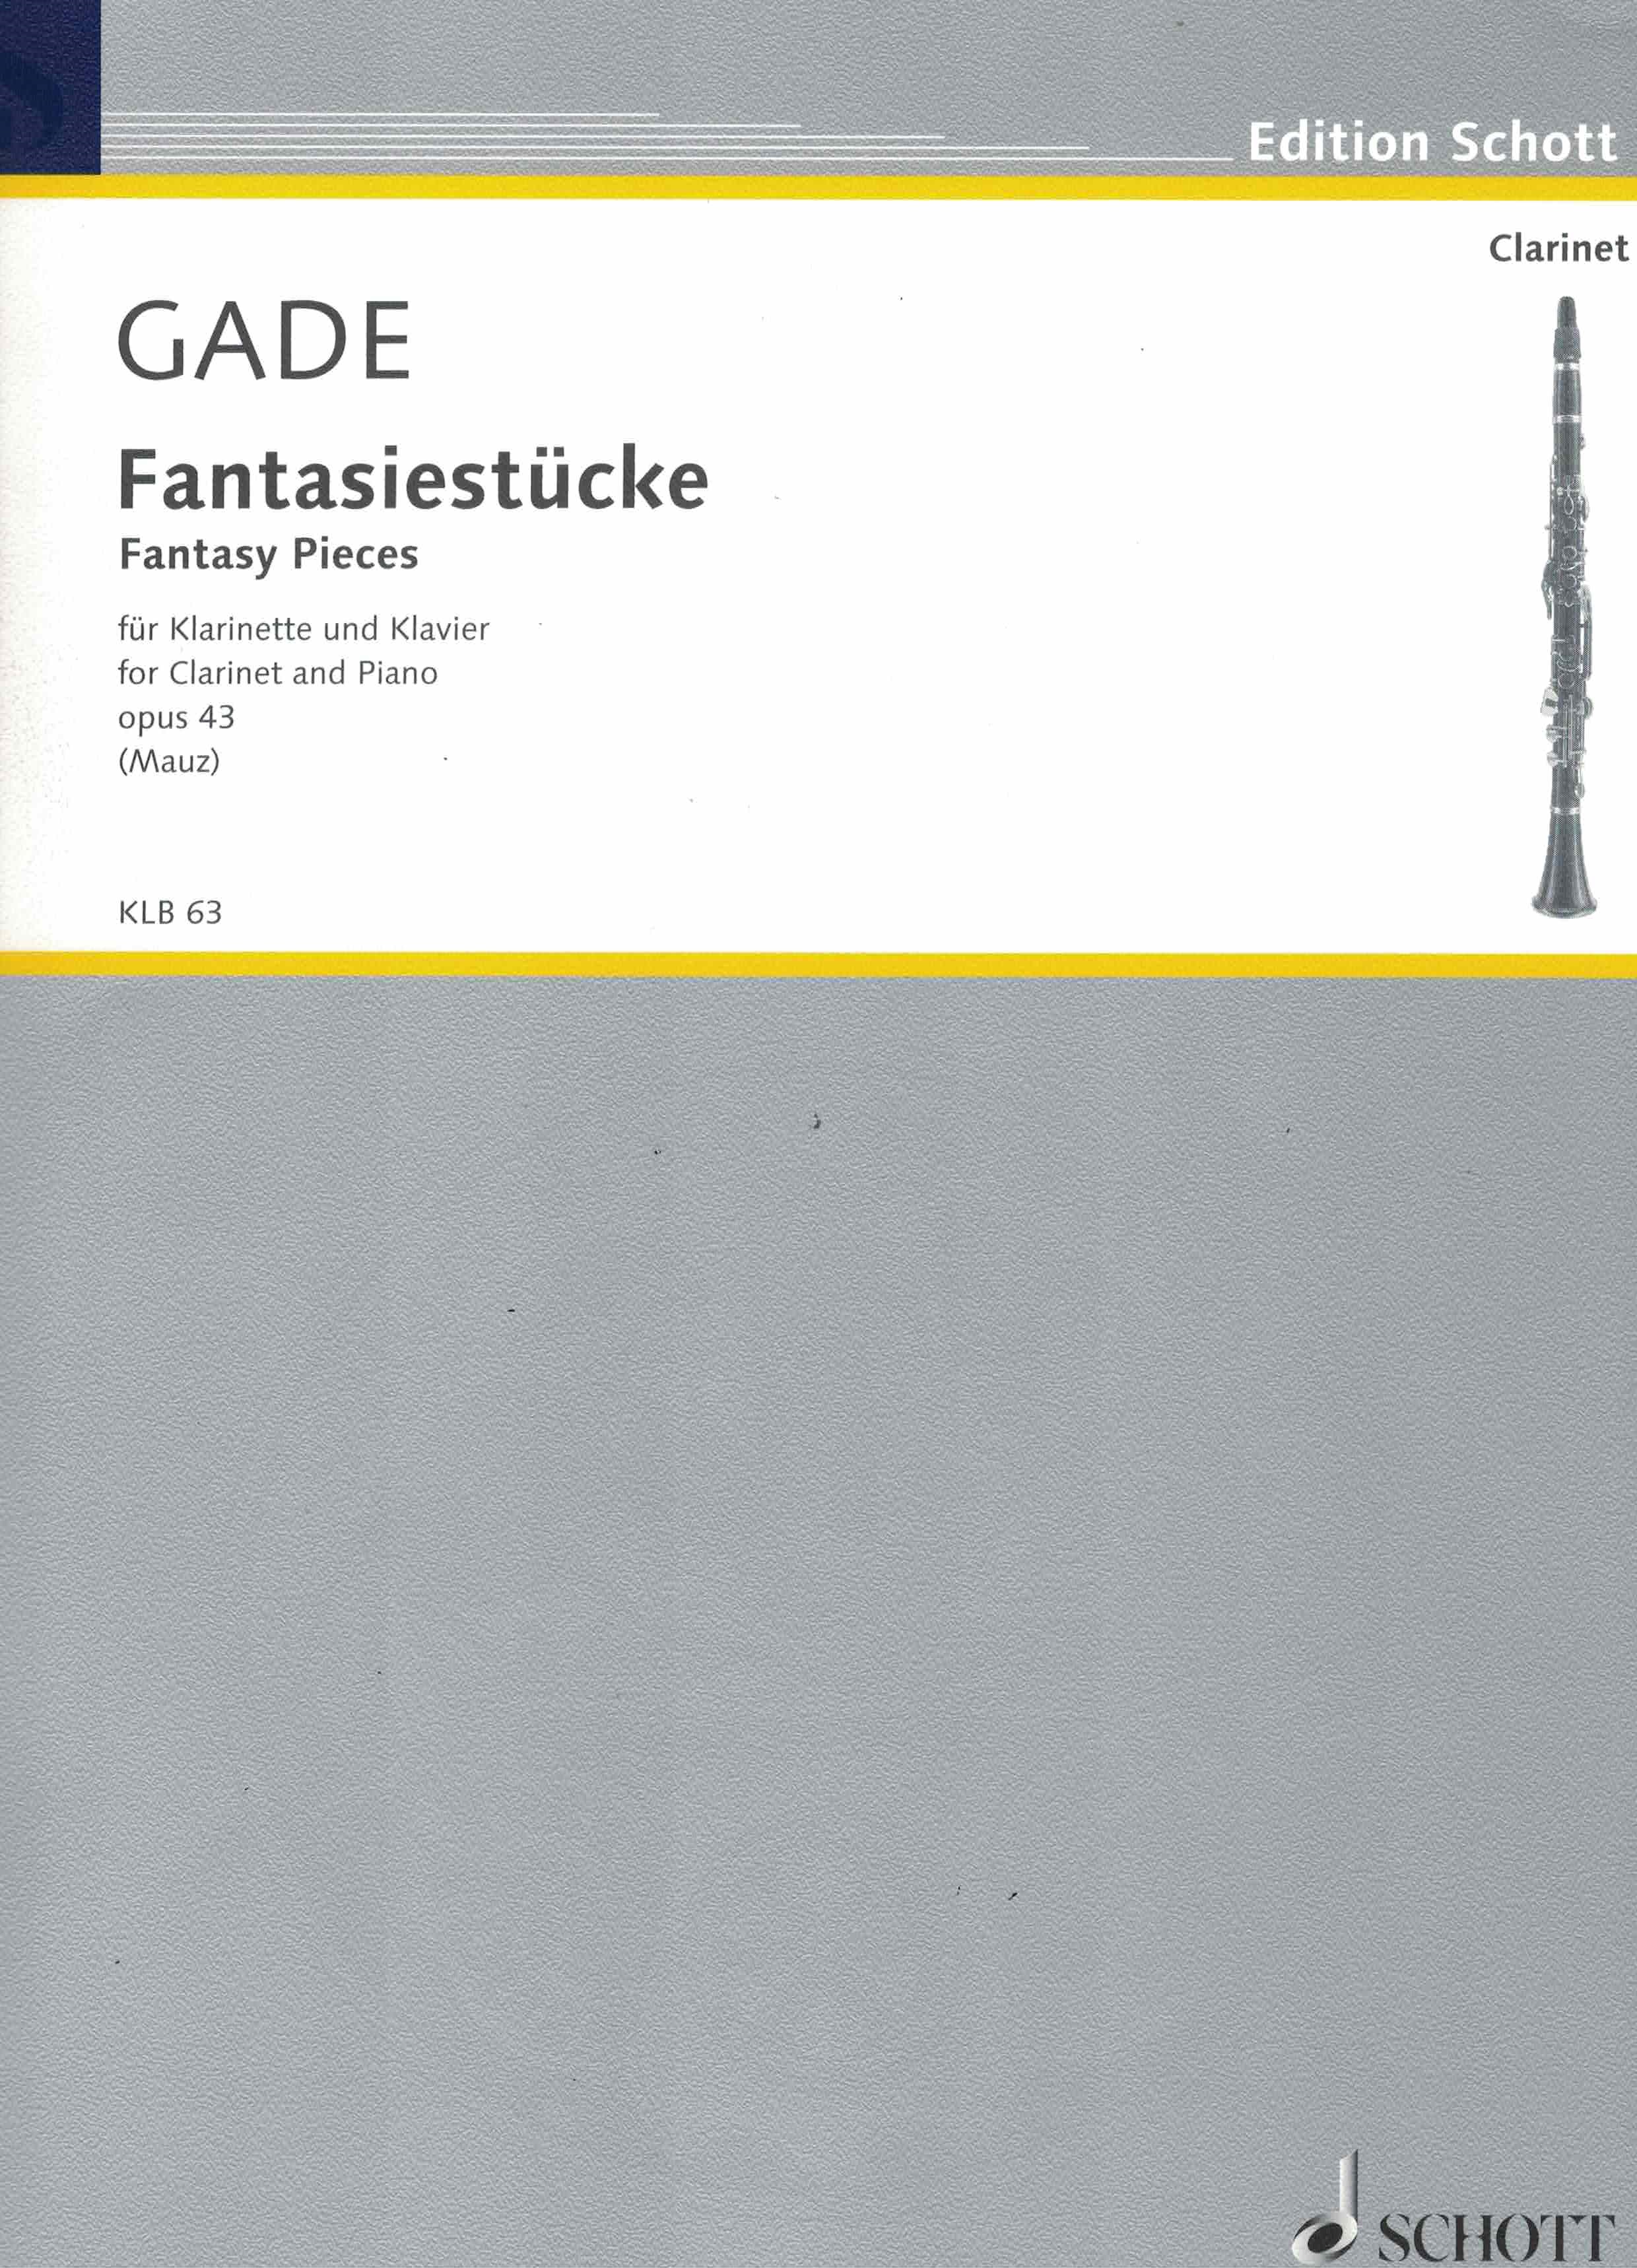 Fantasiestücke op 43 - Gade, Klarinette/Klavier